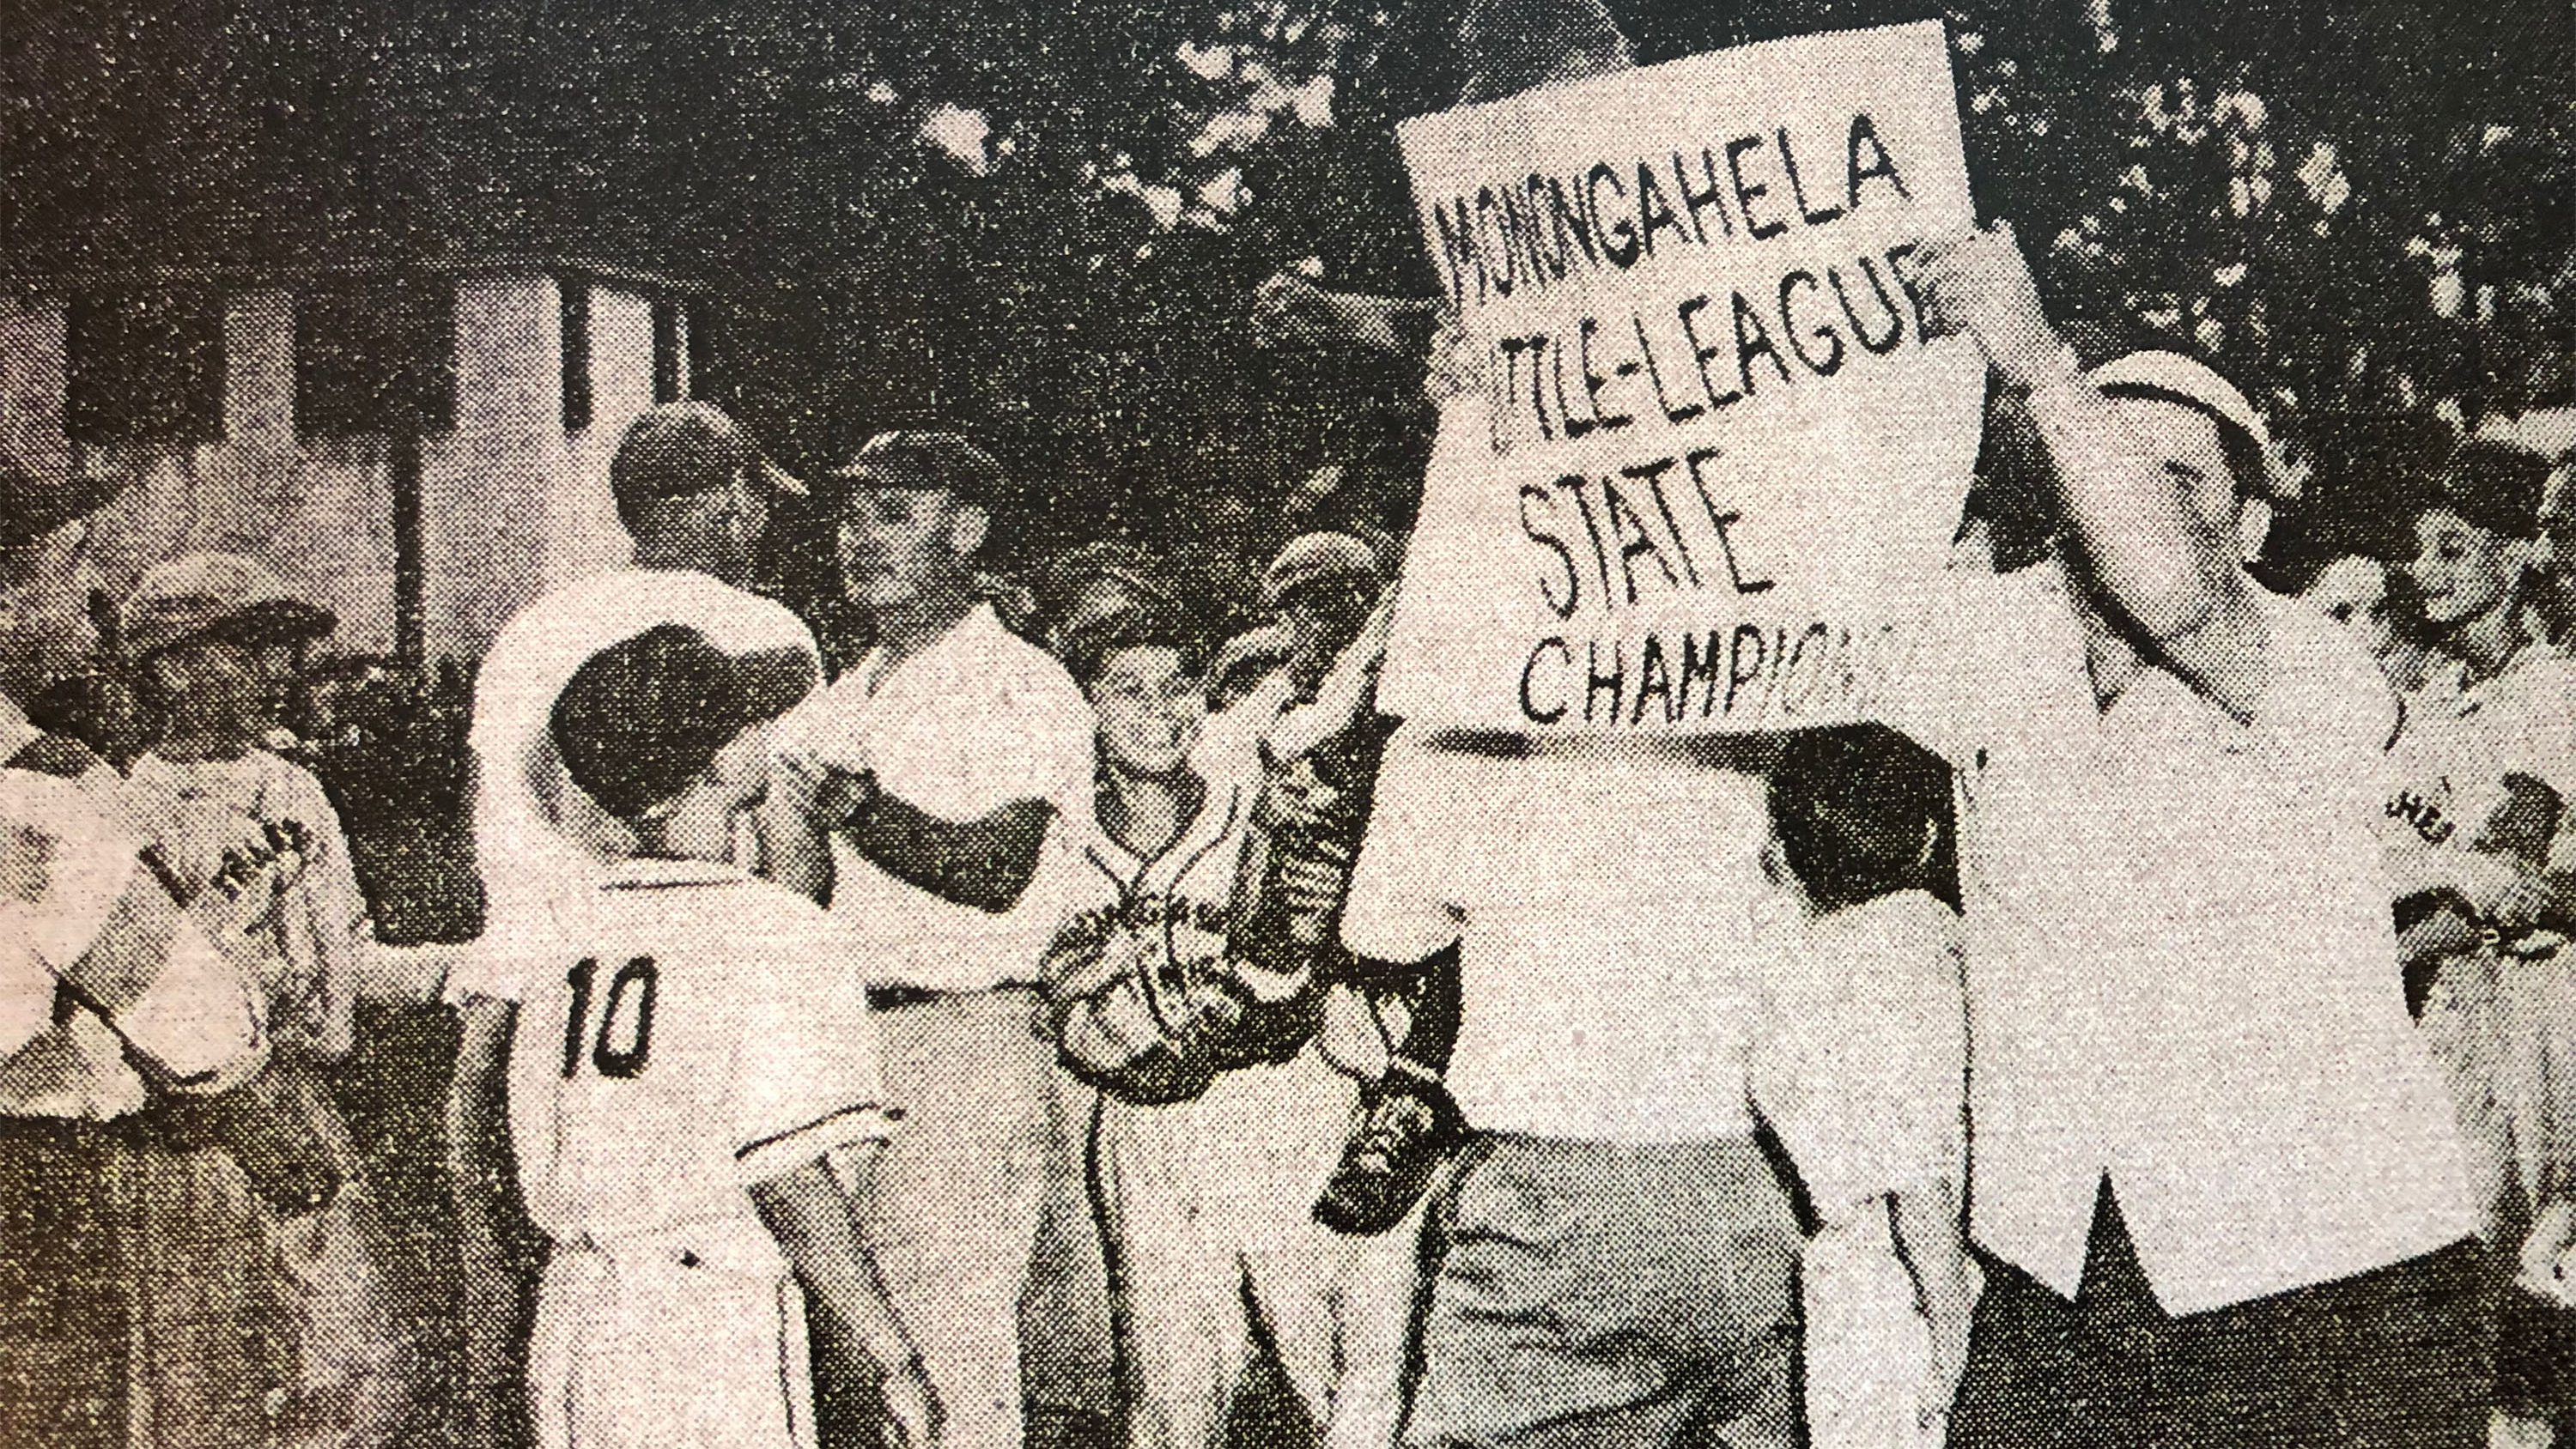 Monongahela PA celebrates Little League State Champions 1952 (Photo Credit -Daily Republican)